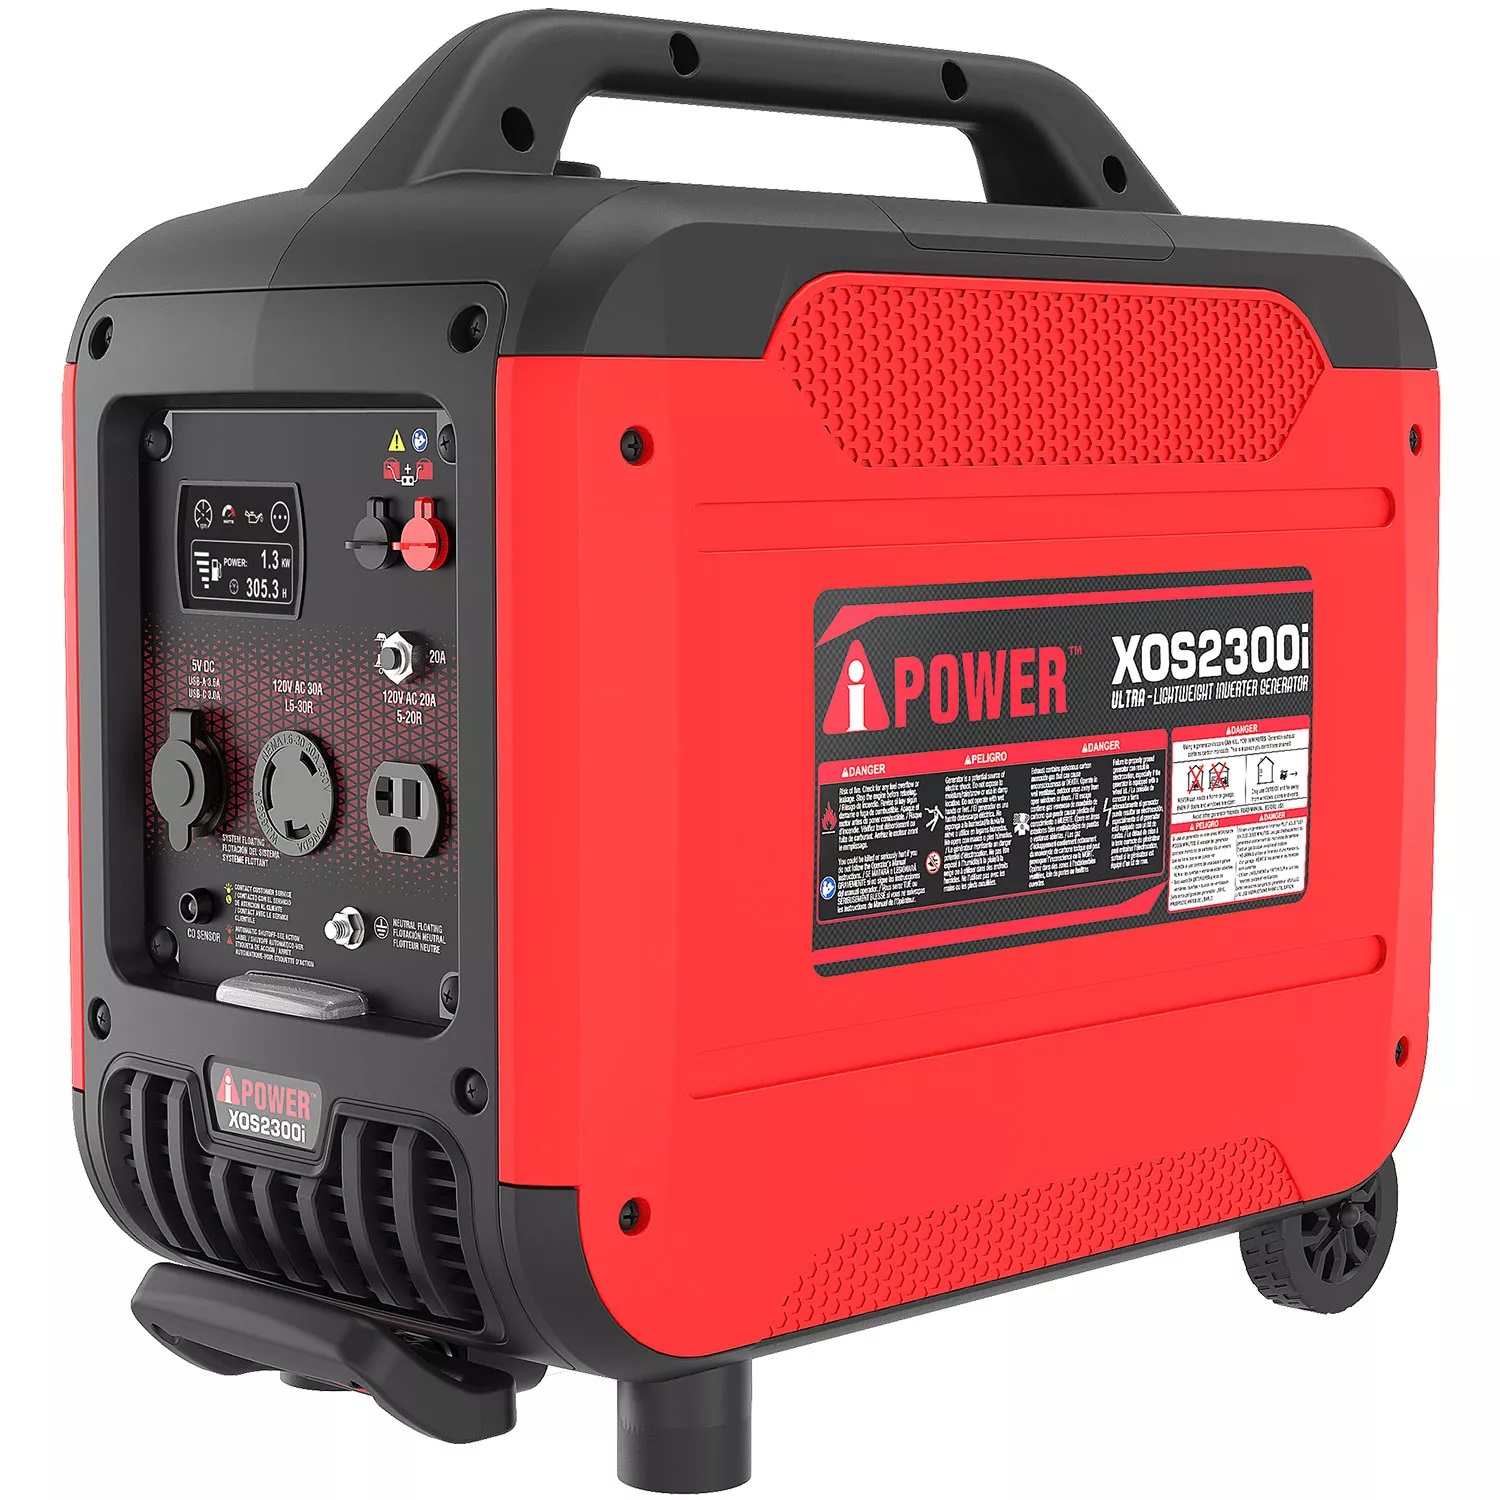 A-iPower 2300 Watt Portable Generator Inverter With Portability Kit & CO Sensor